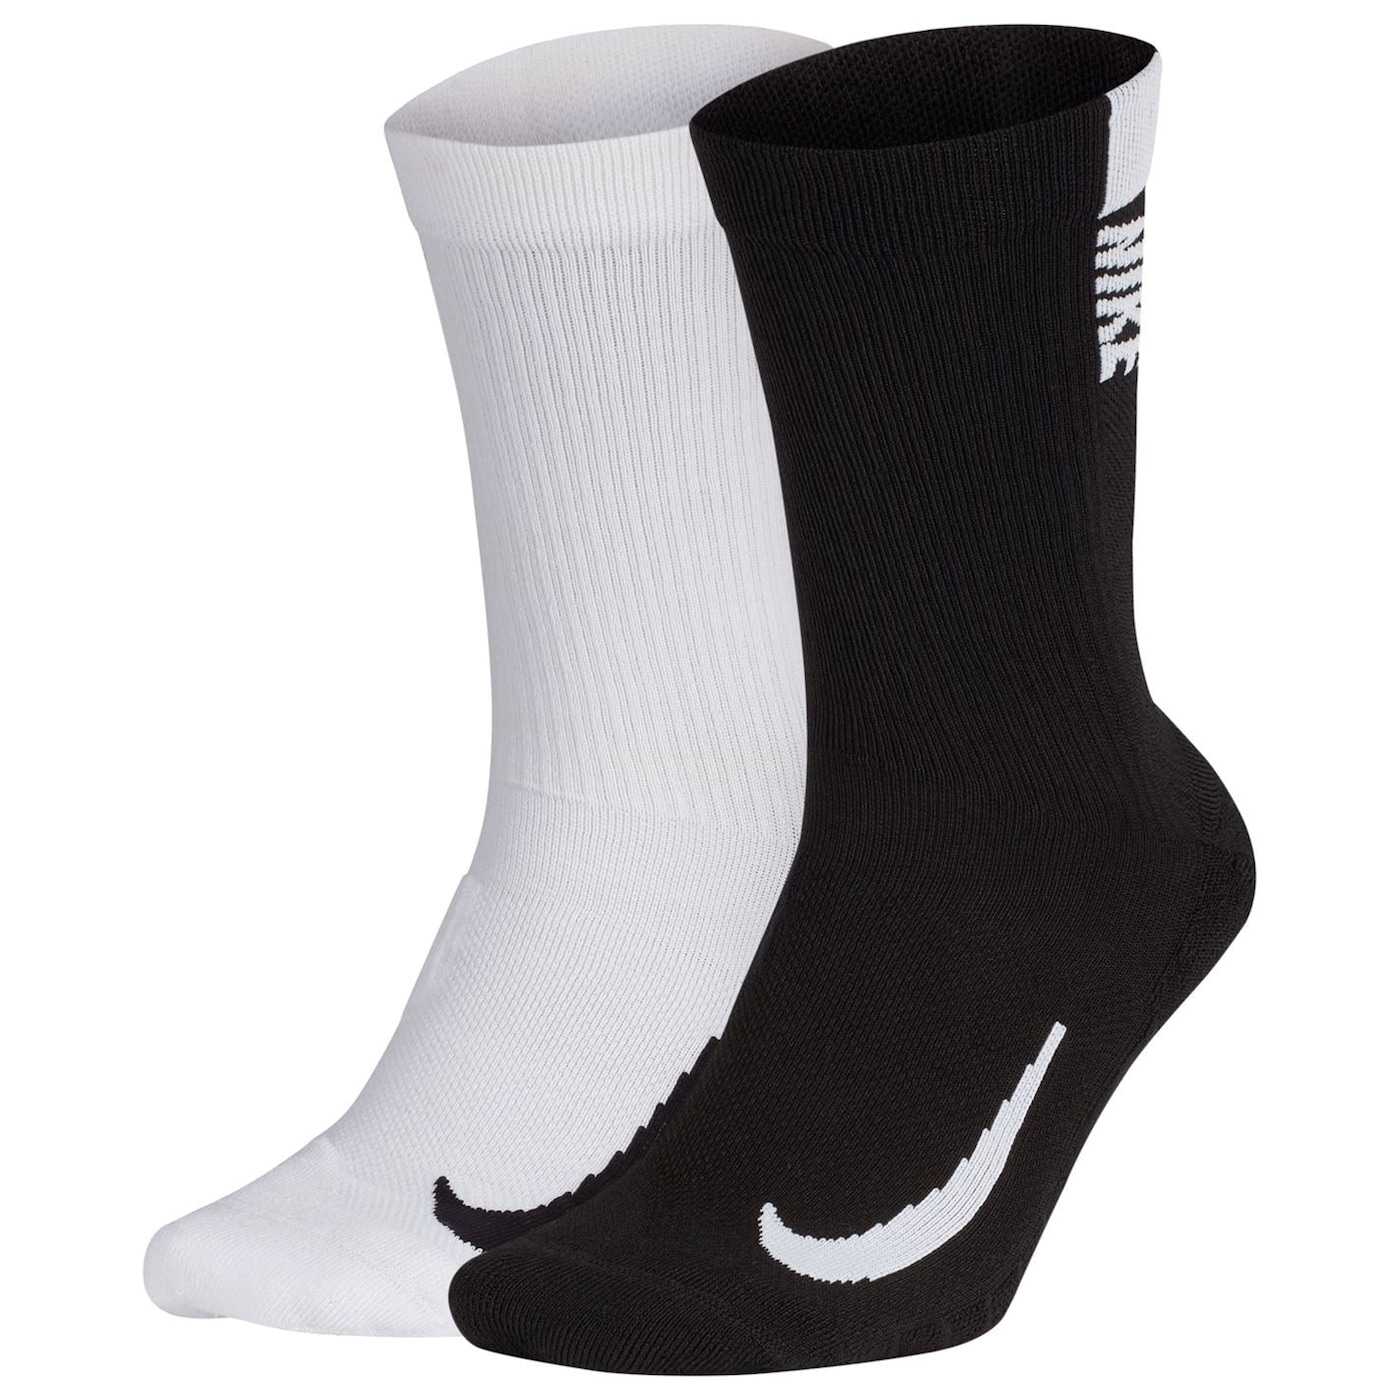 Жени  Дамско облекло  Бельо  Чорапи Nike Multiplier Crew Running Socks 2 Pack Unisex Adults 1022700-6226800